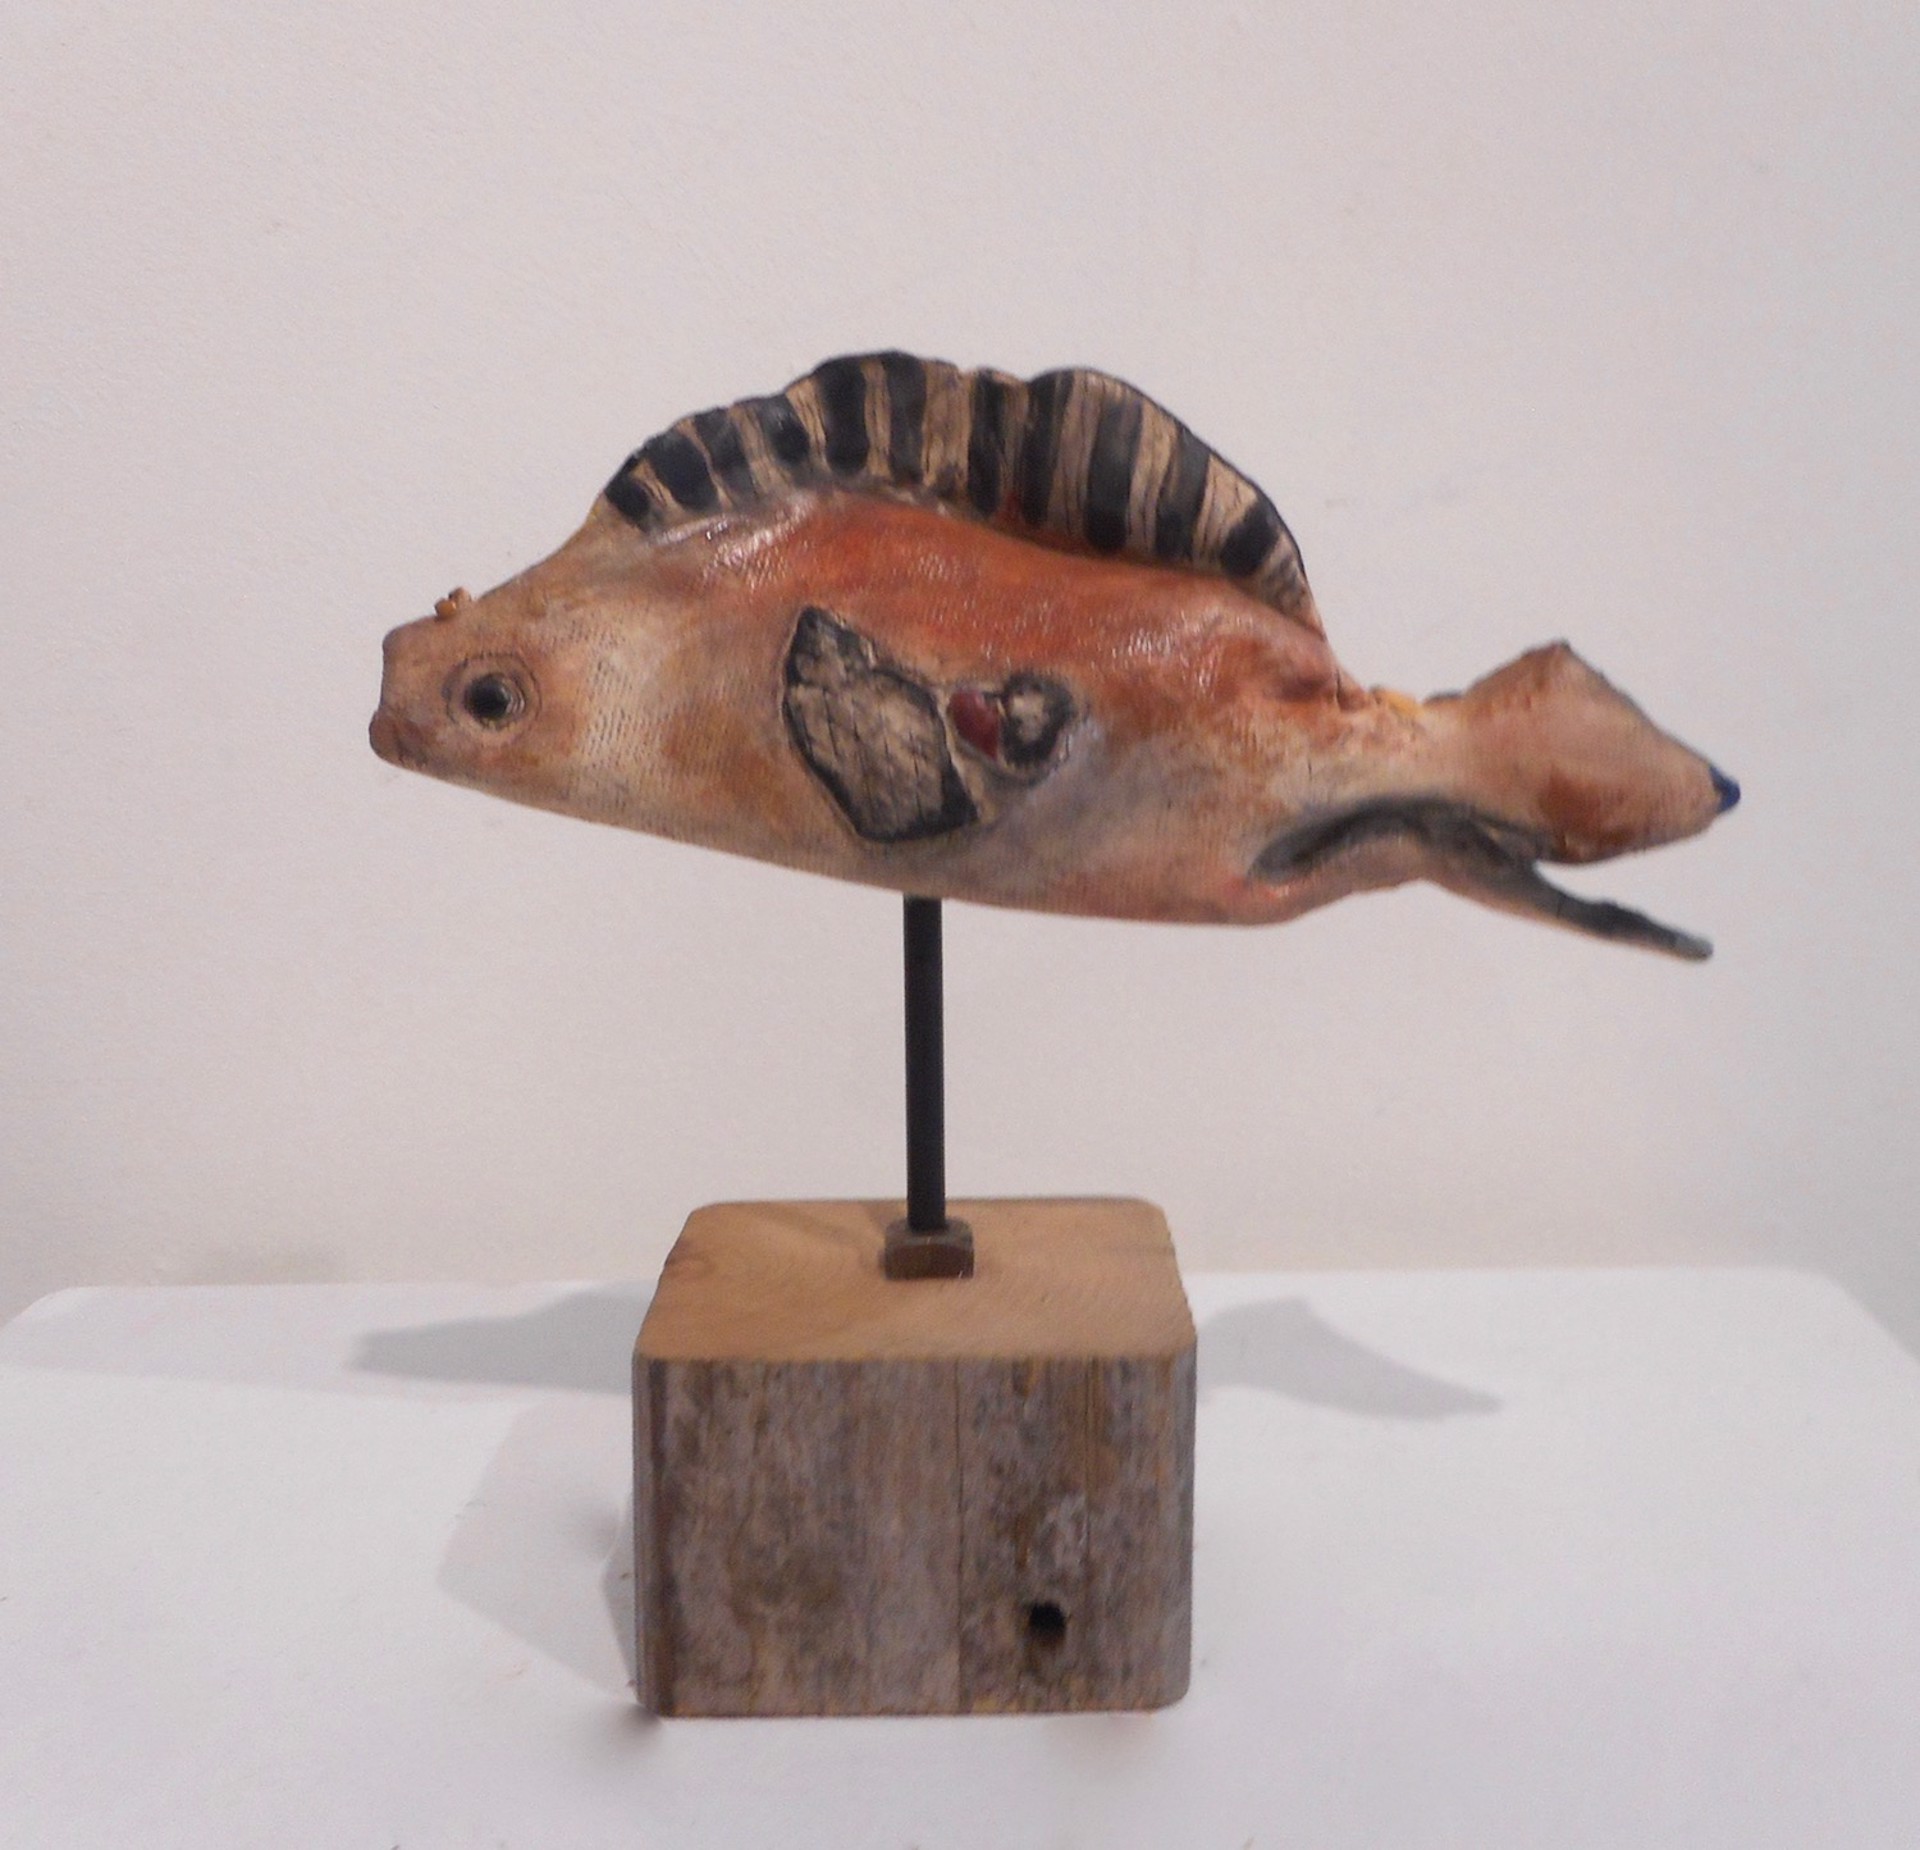 Pan Fish #1 by Jan Thomas